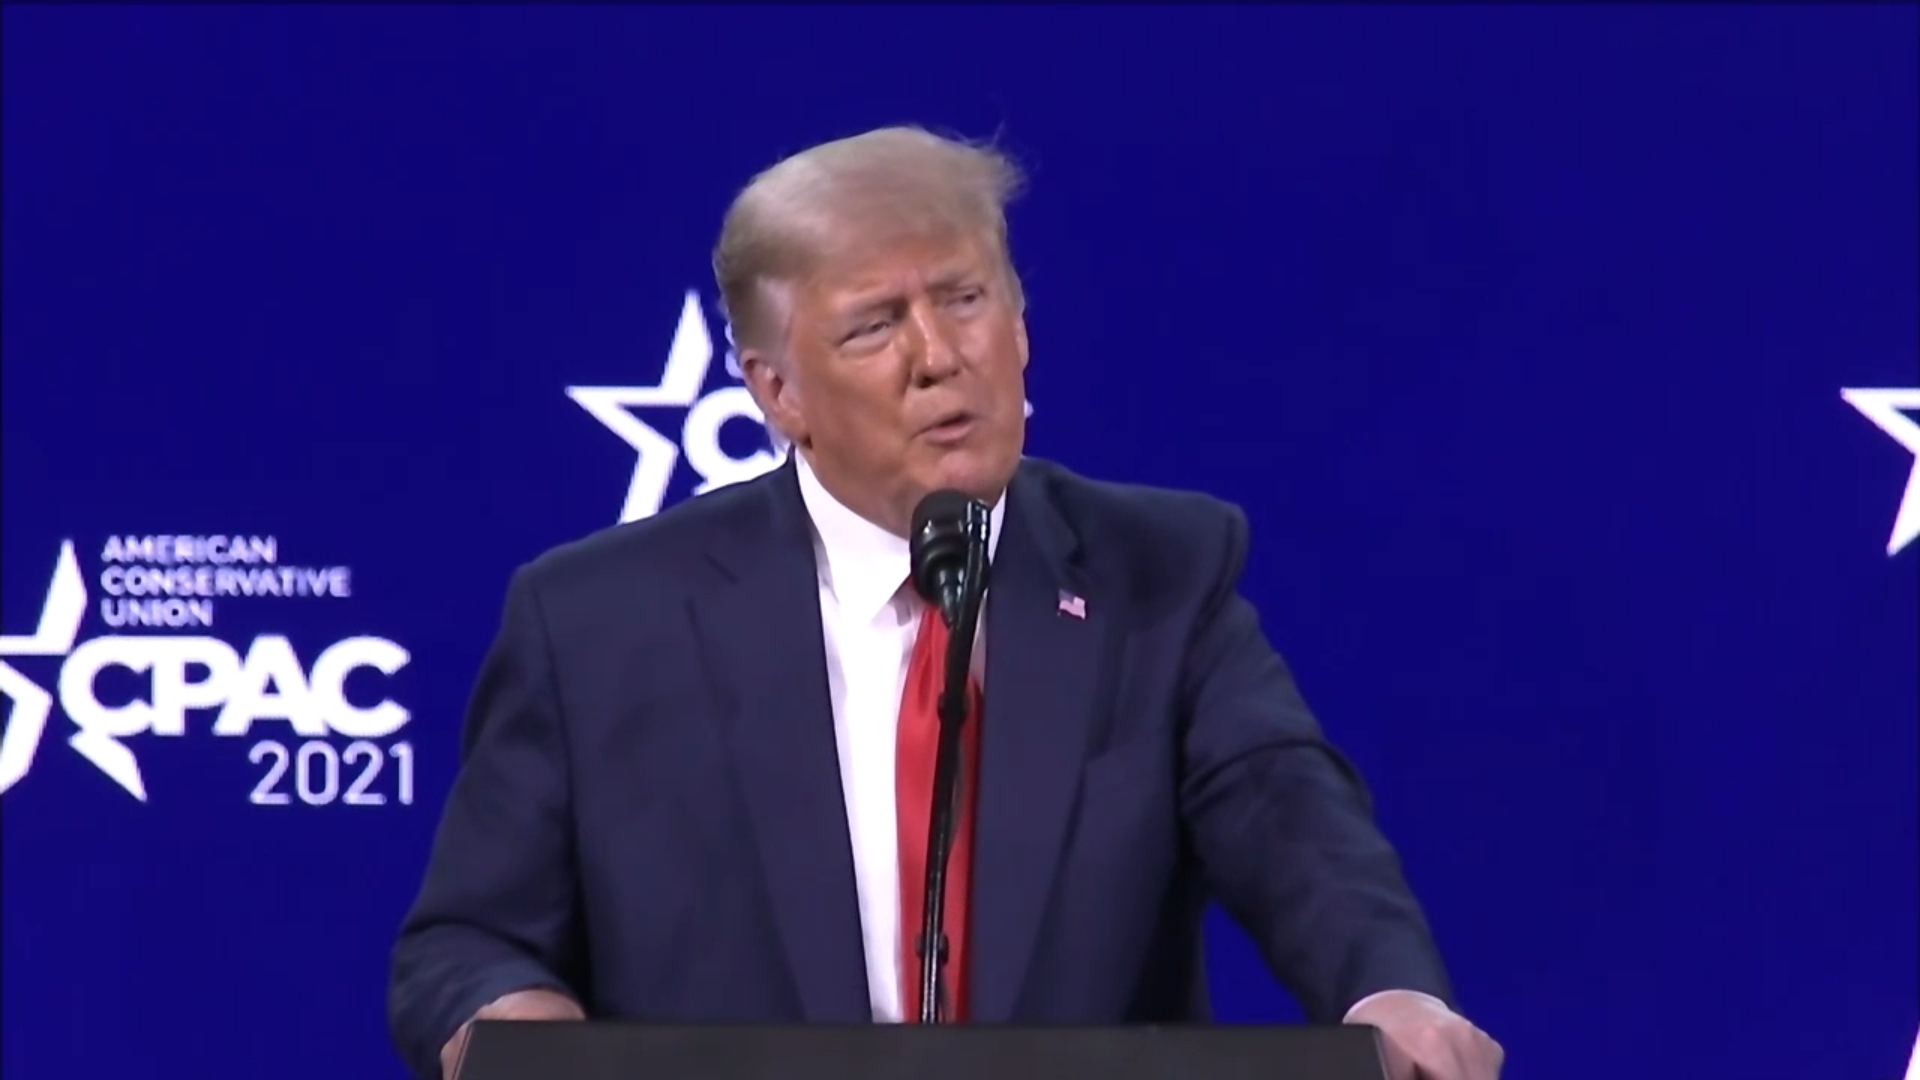 Trump’s Full Speech at CPAC 2021